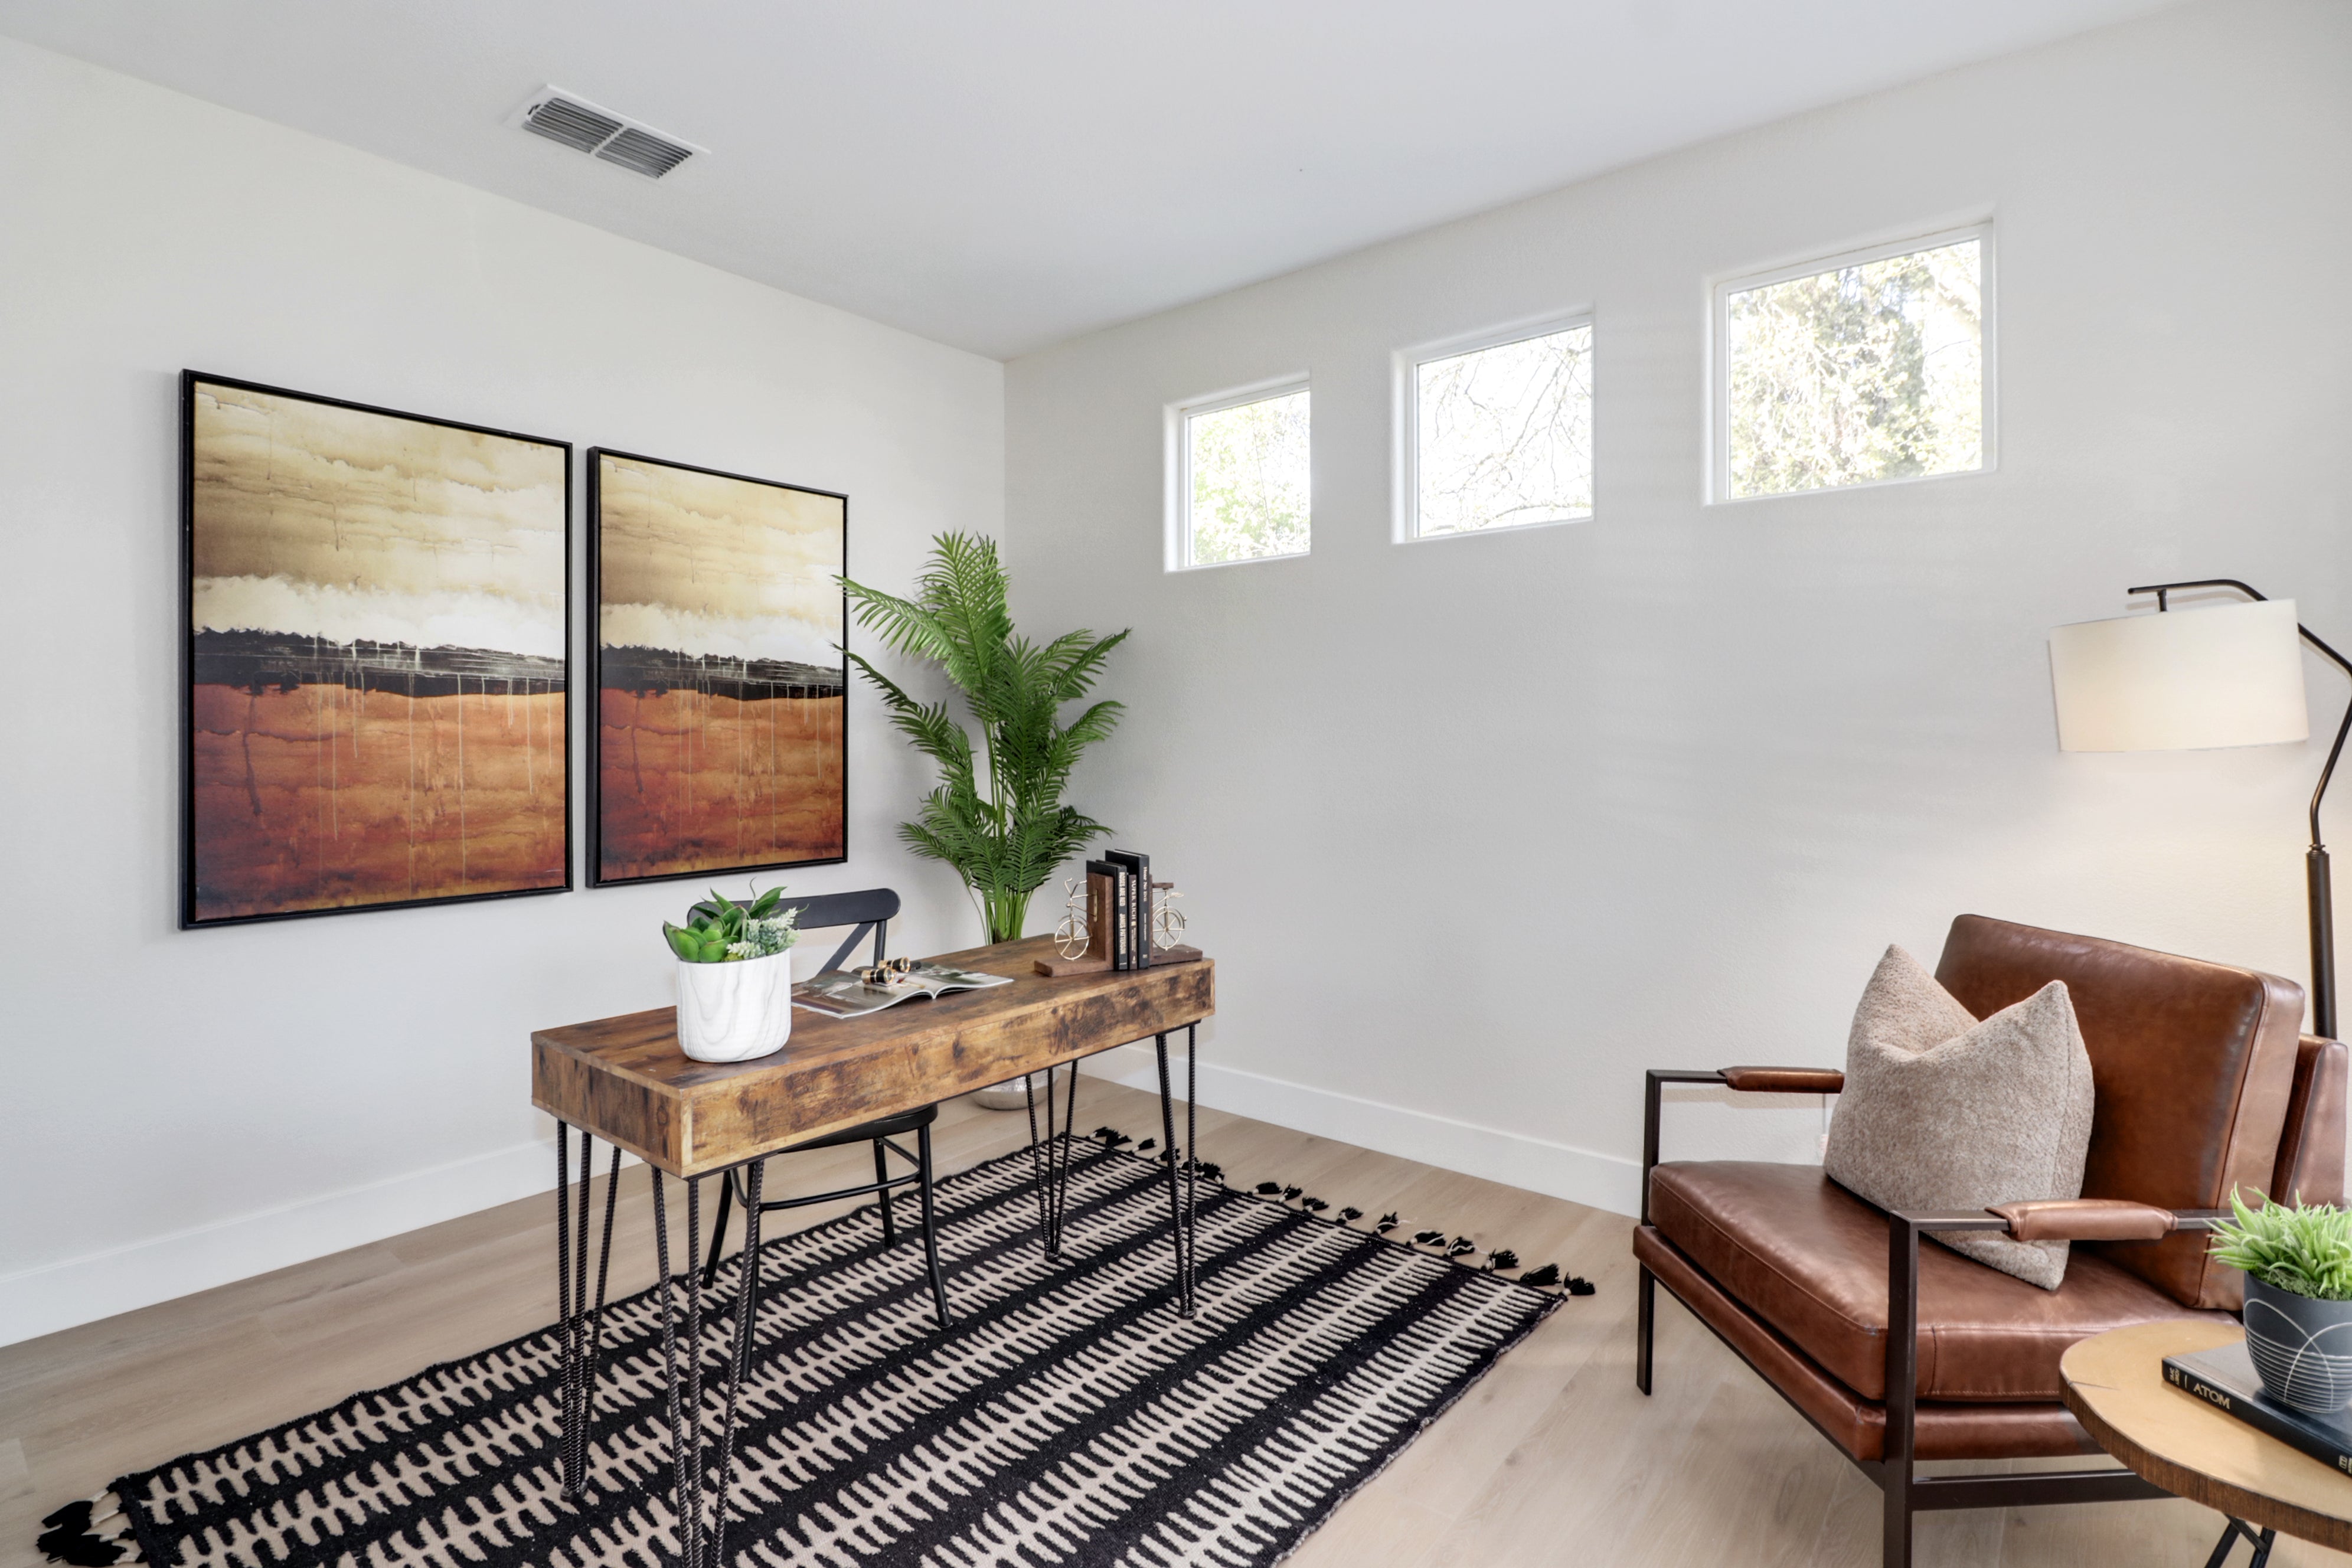 Premiere Home Staging Projects | Home office interior design idea - Barton Rd, Granite Bay